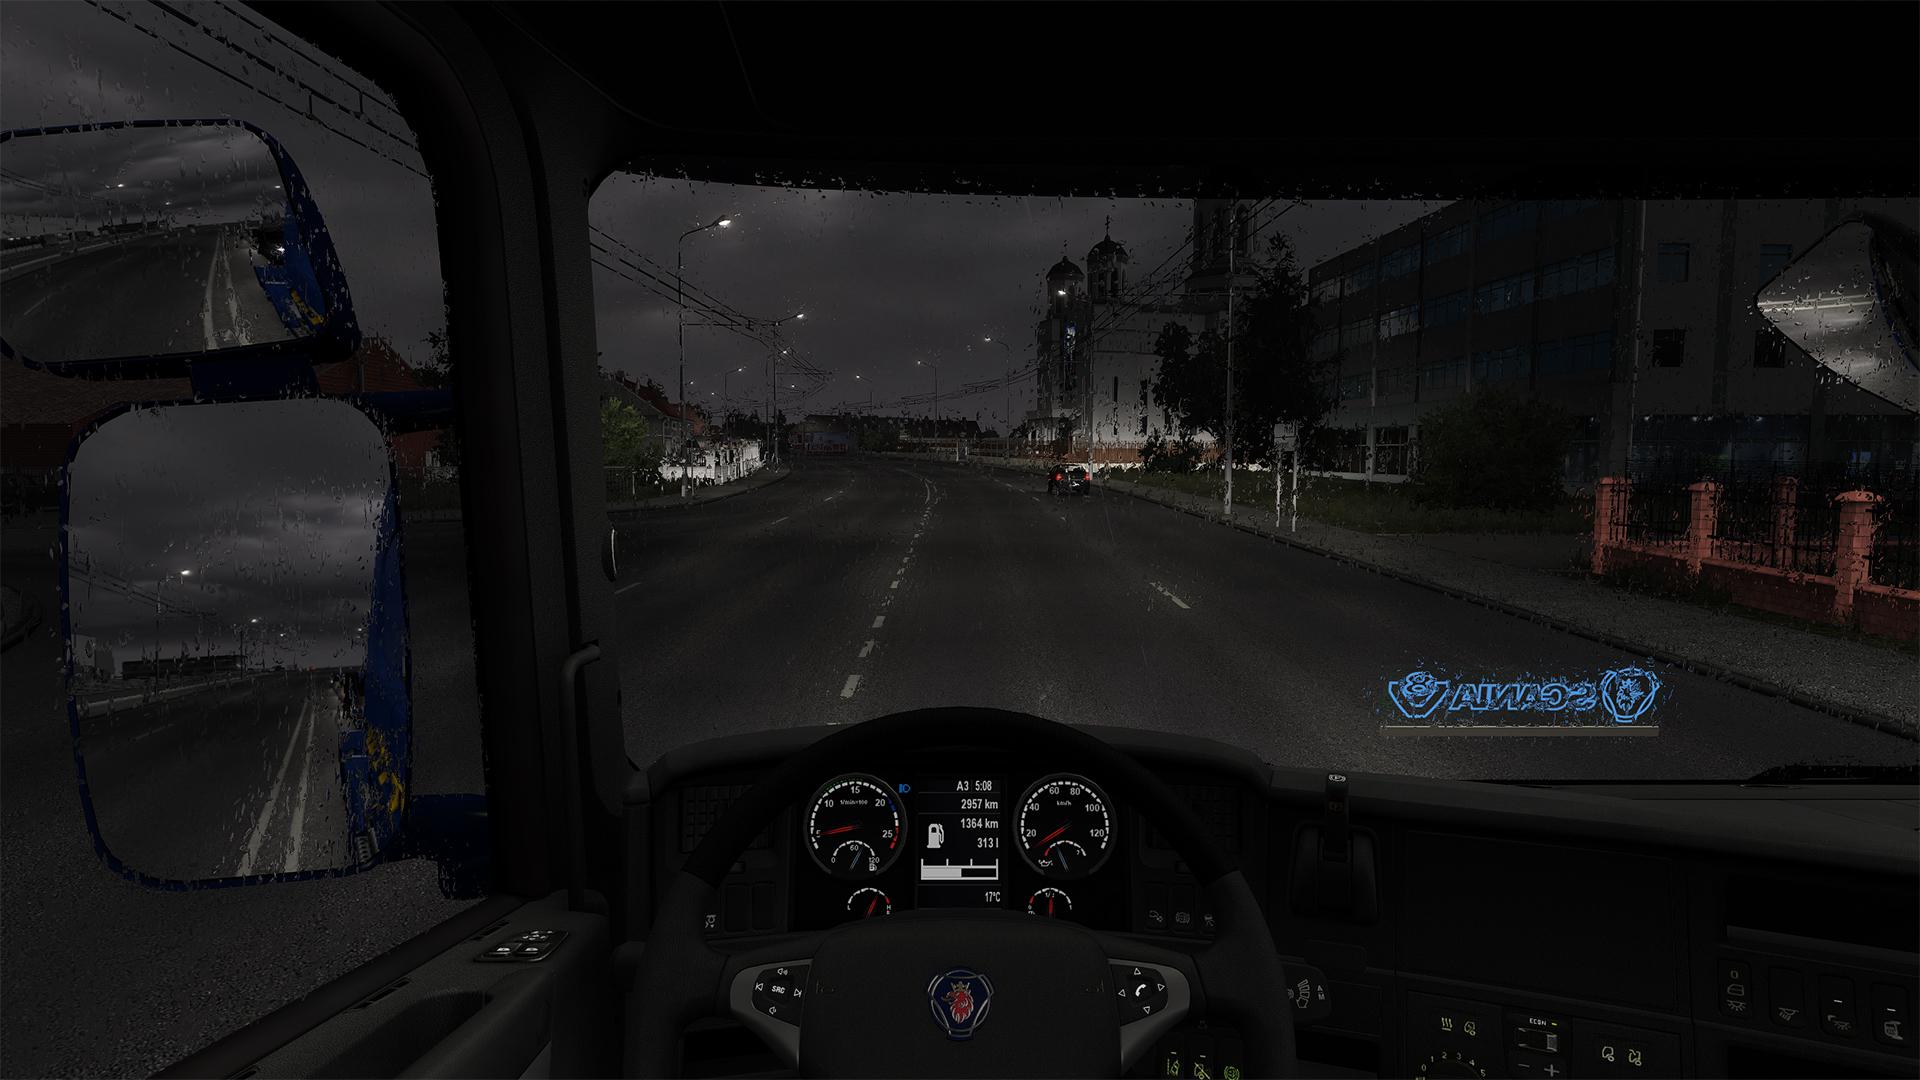 Моды на реалистичность 1.20 4. Euro Truck Simulator 2 Rain. Етс 2 дождь. Realistic Rain ETS 2. Етс 2 моды дождь.